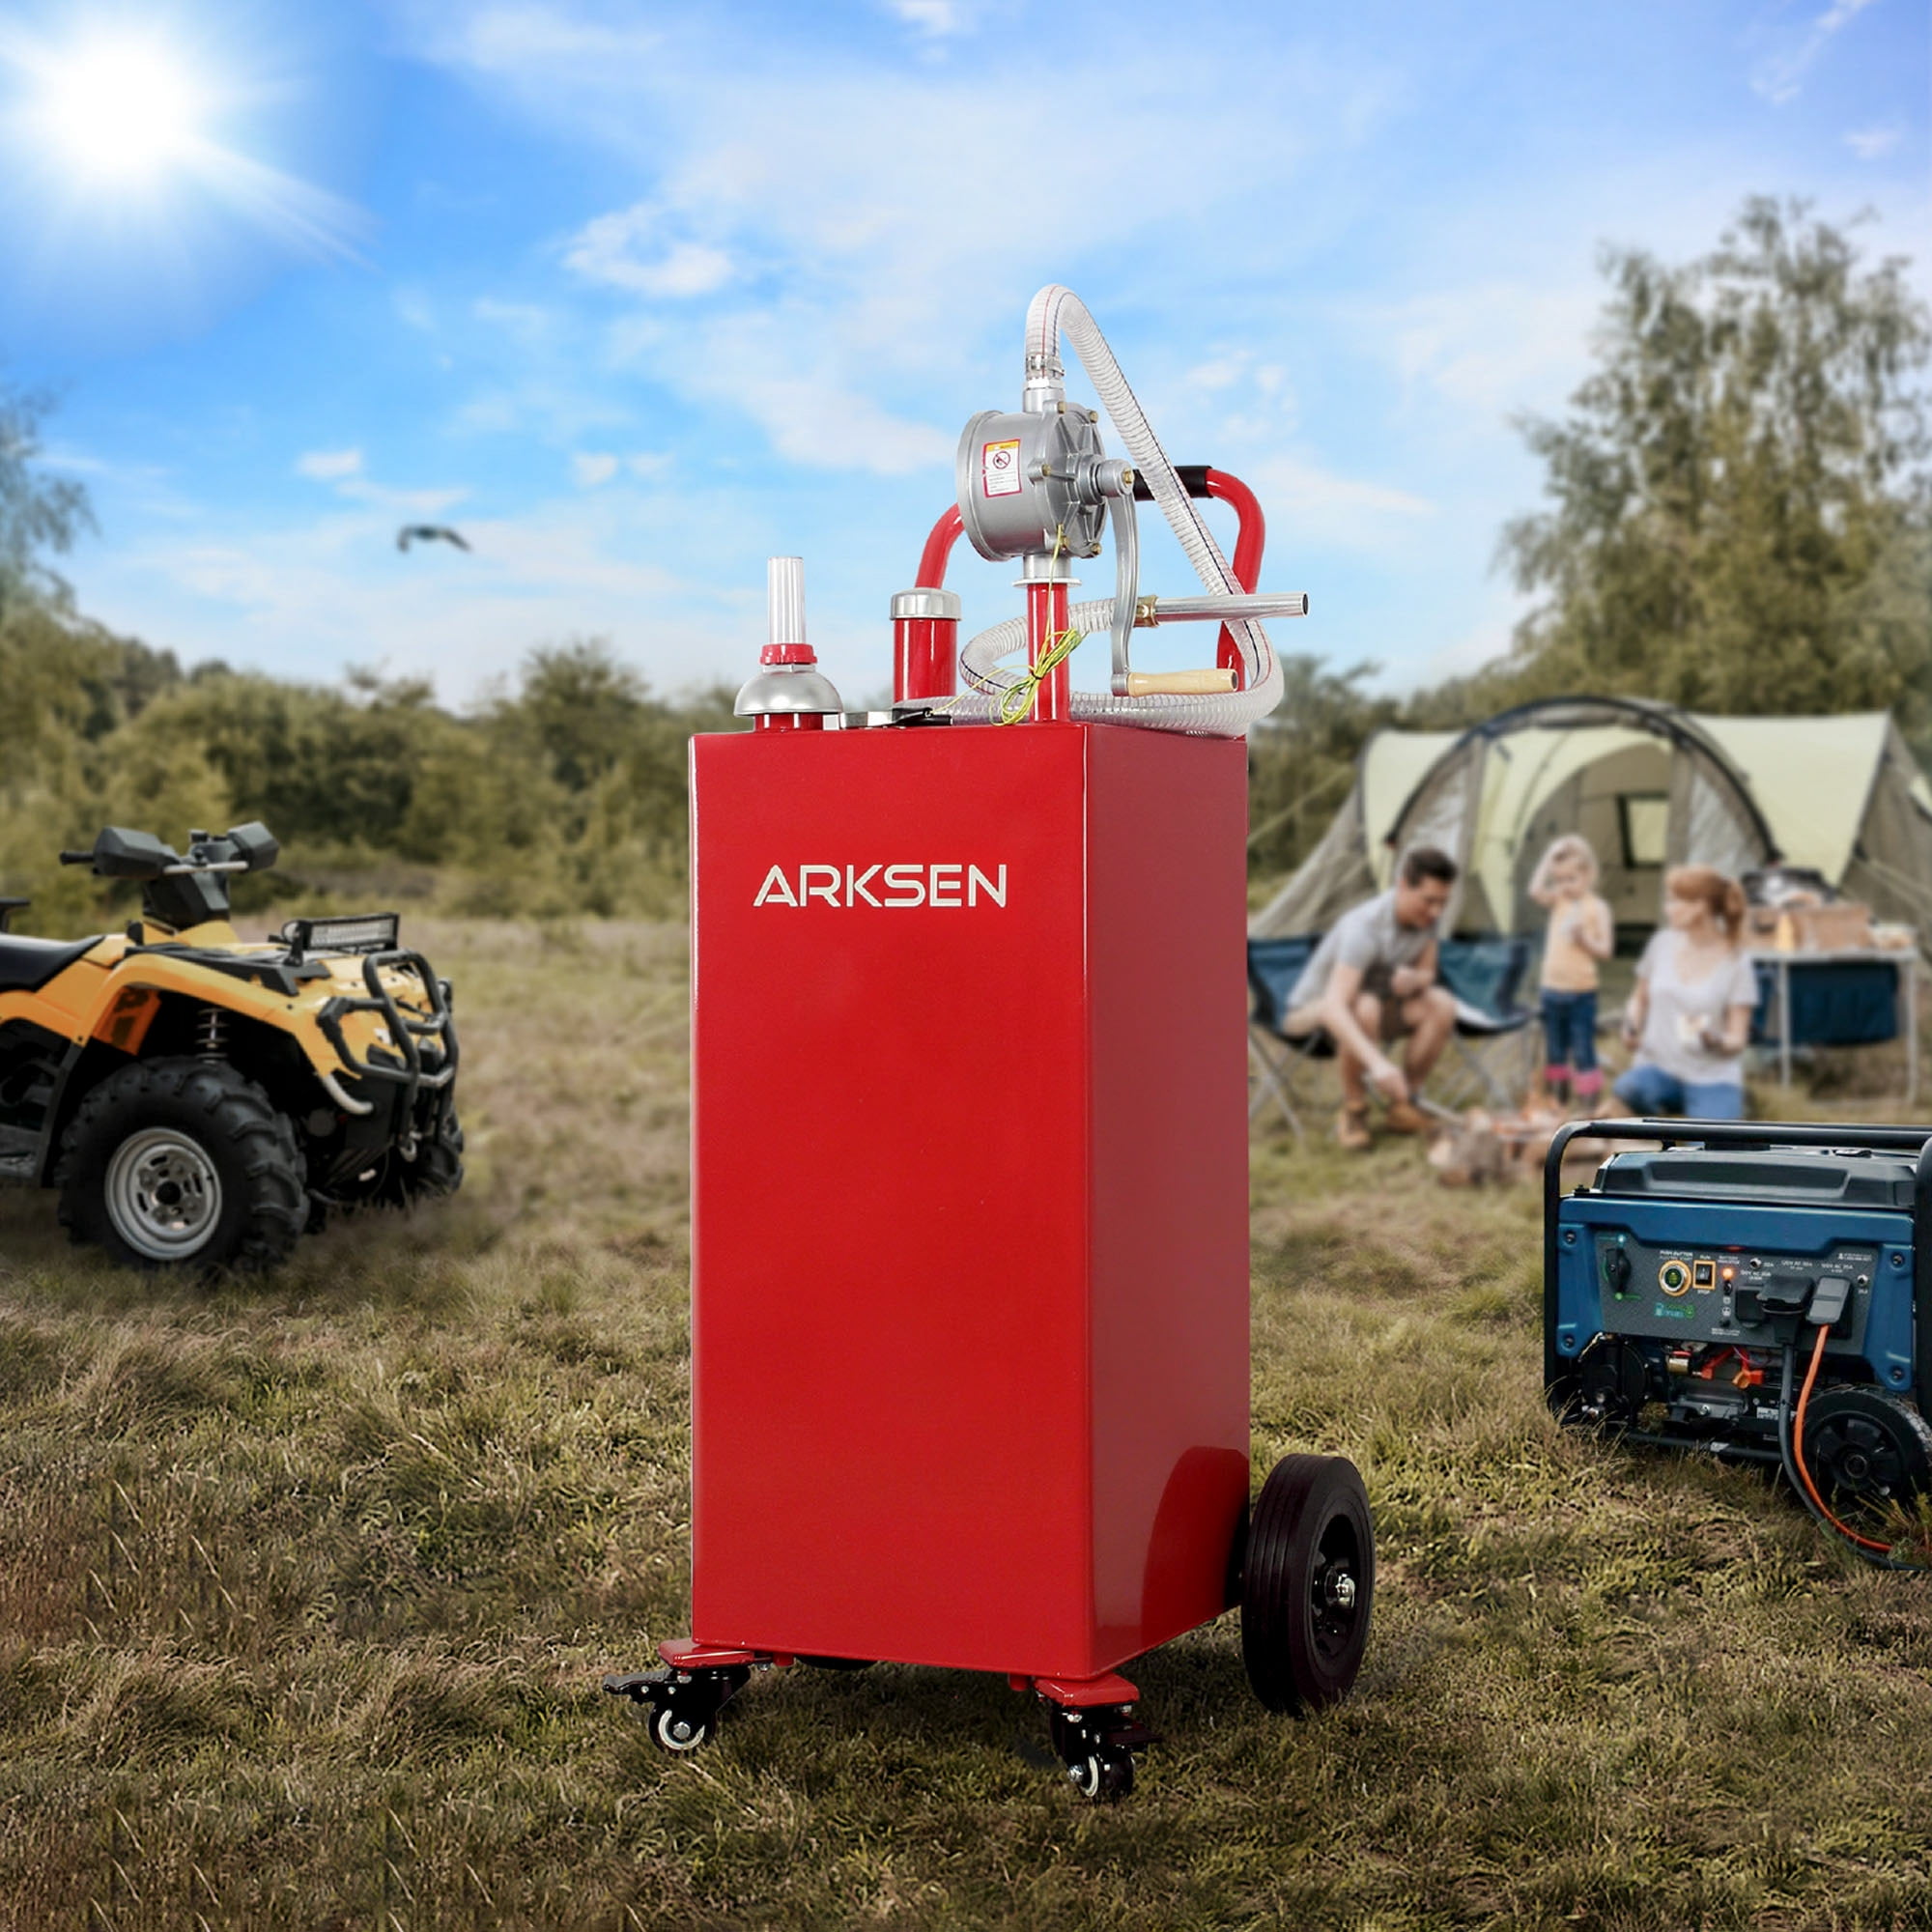 Arksen Portable 35-Gallon Gas Caddy Fuel Tank Storage Transfer Gasoline